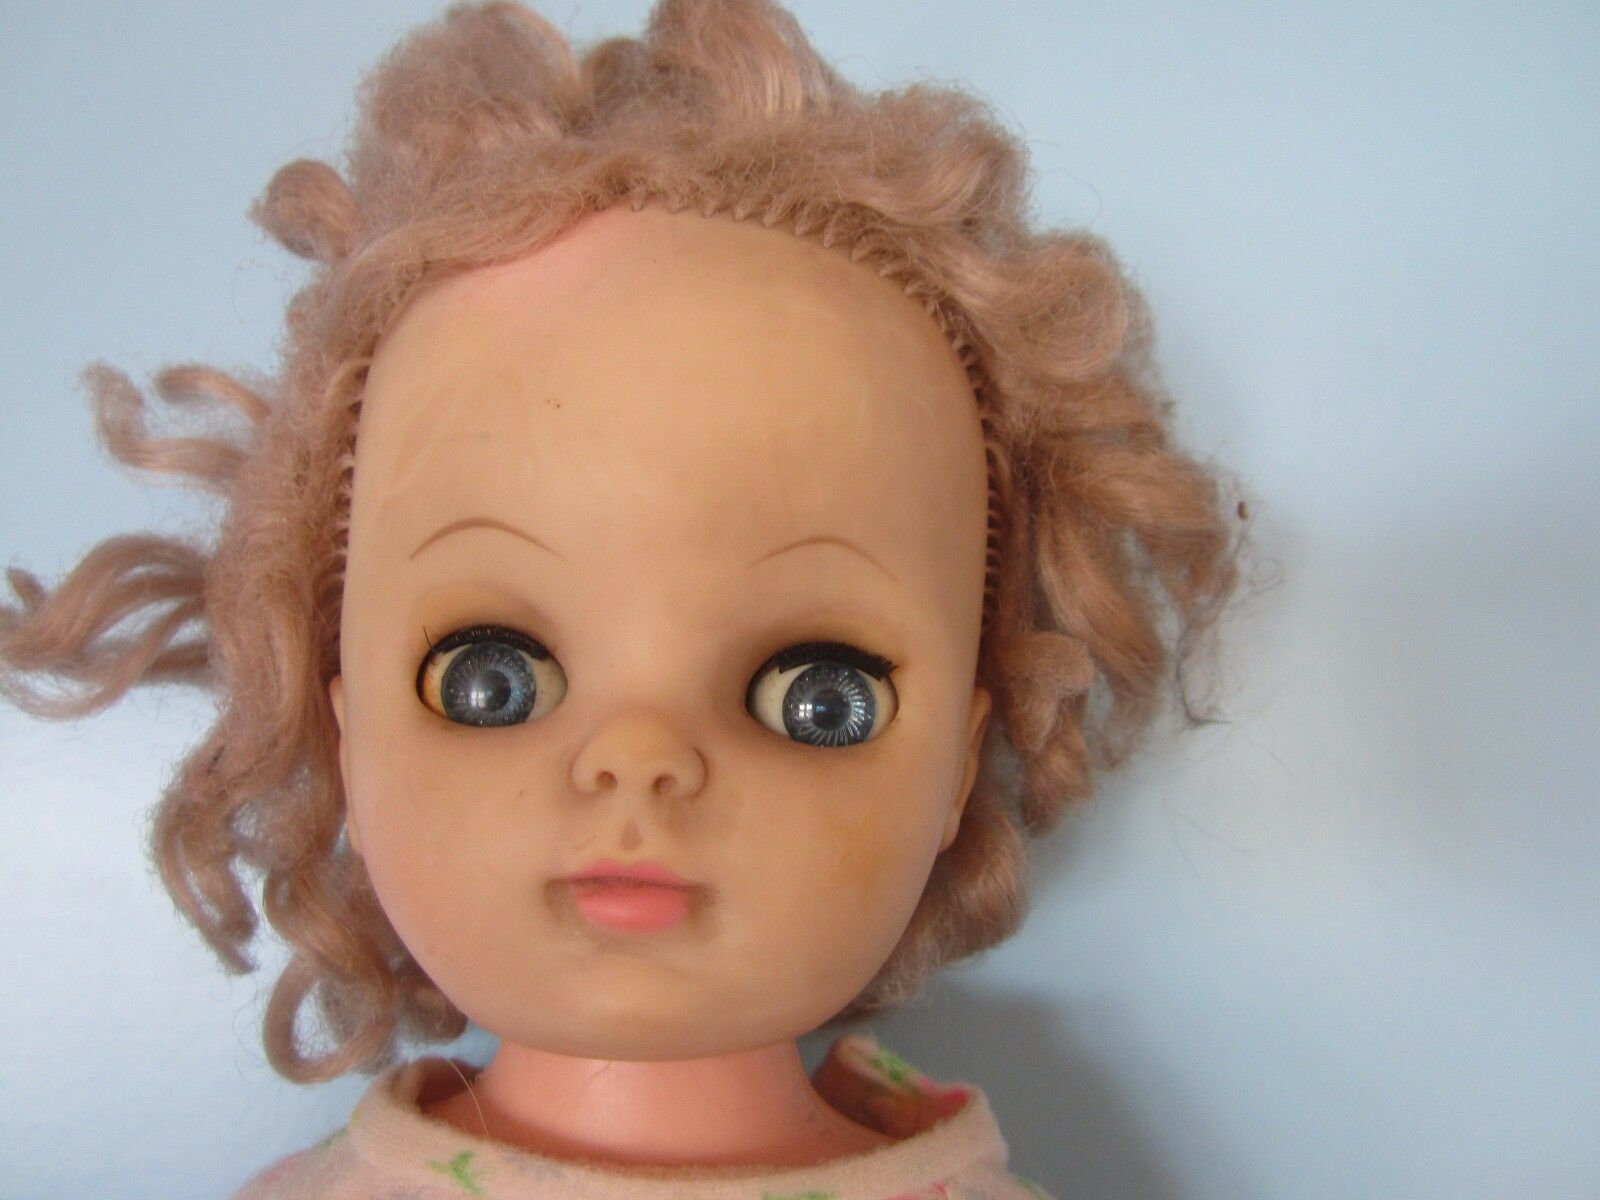 15m Eegee 1967 Blonde Hair Doll Moving Arms & Legs, Blue Sleep Eyes